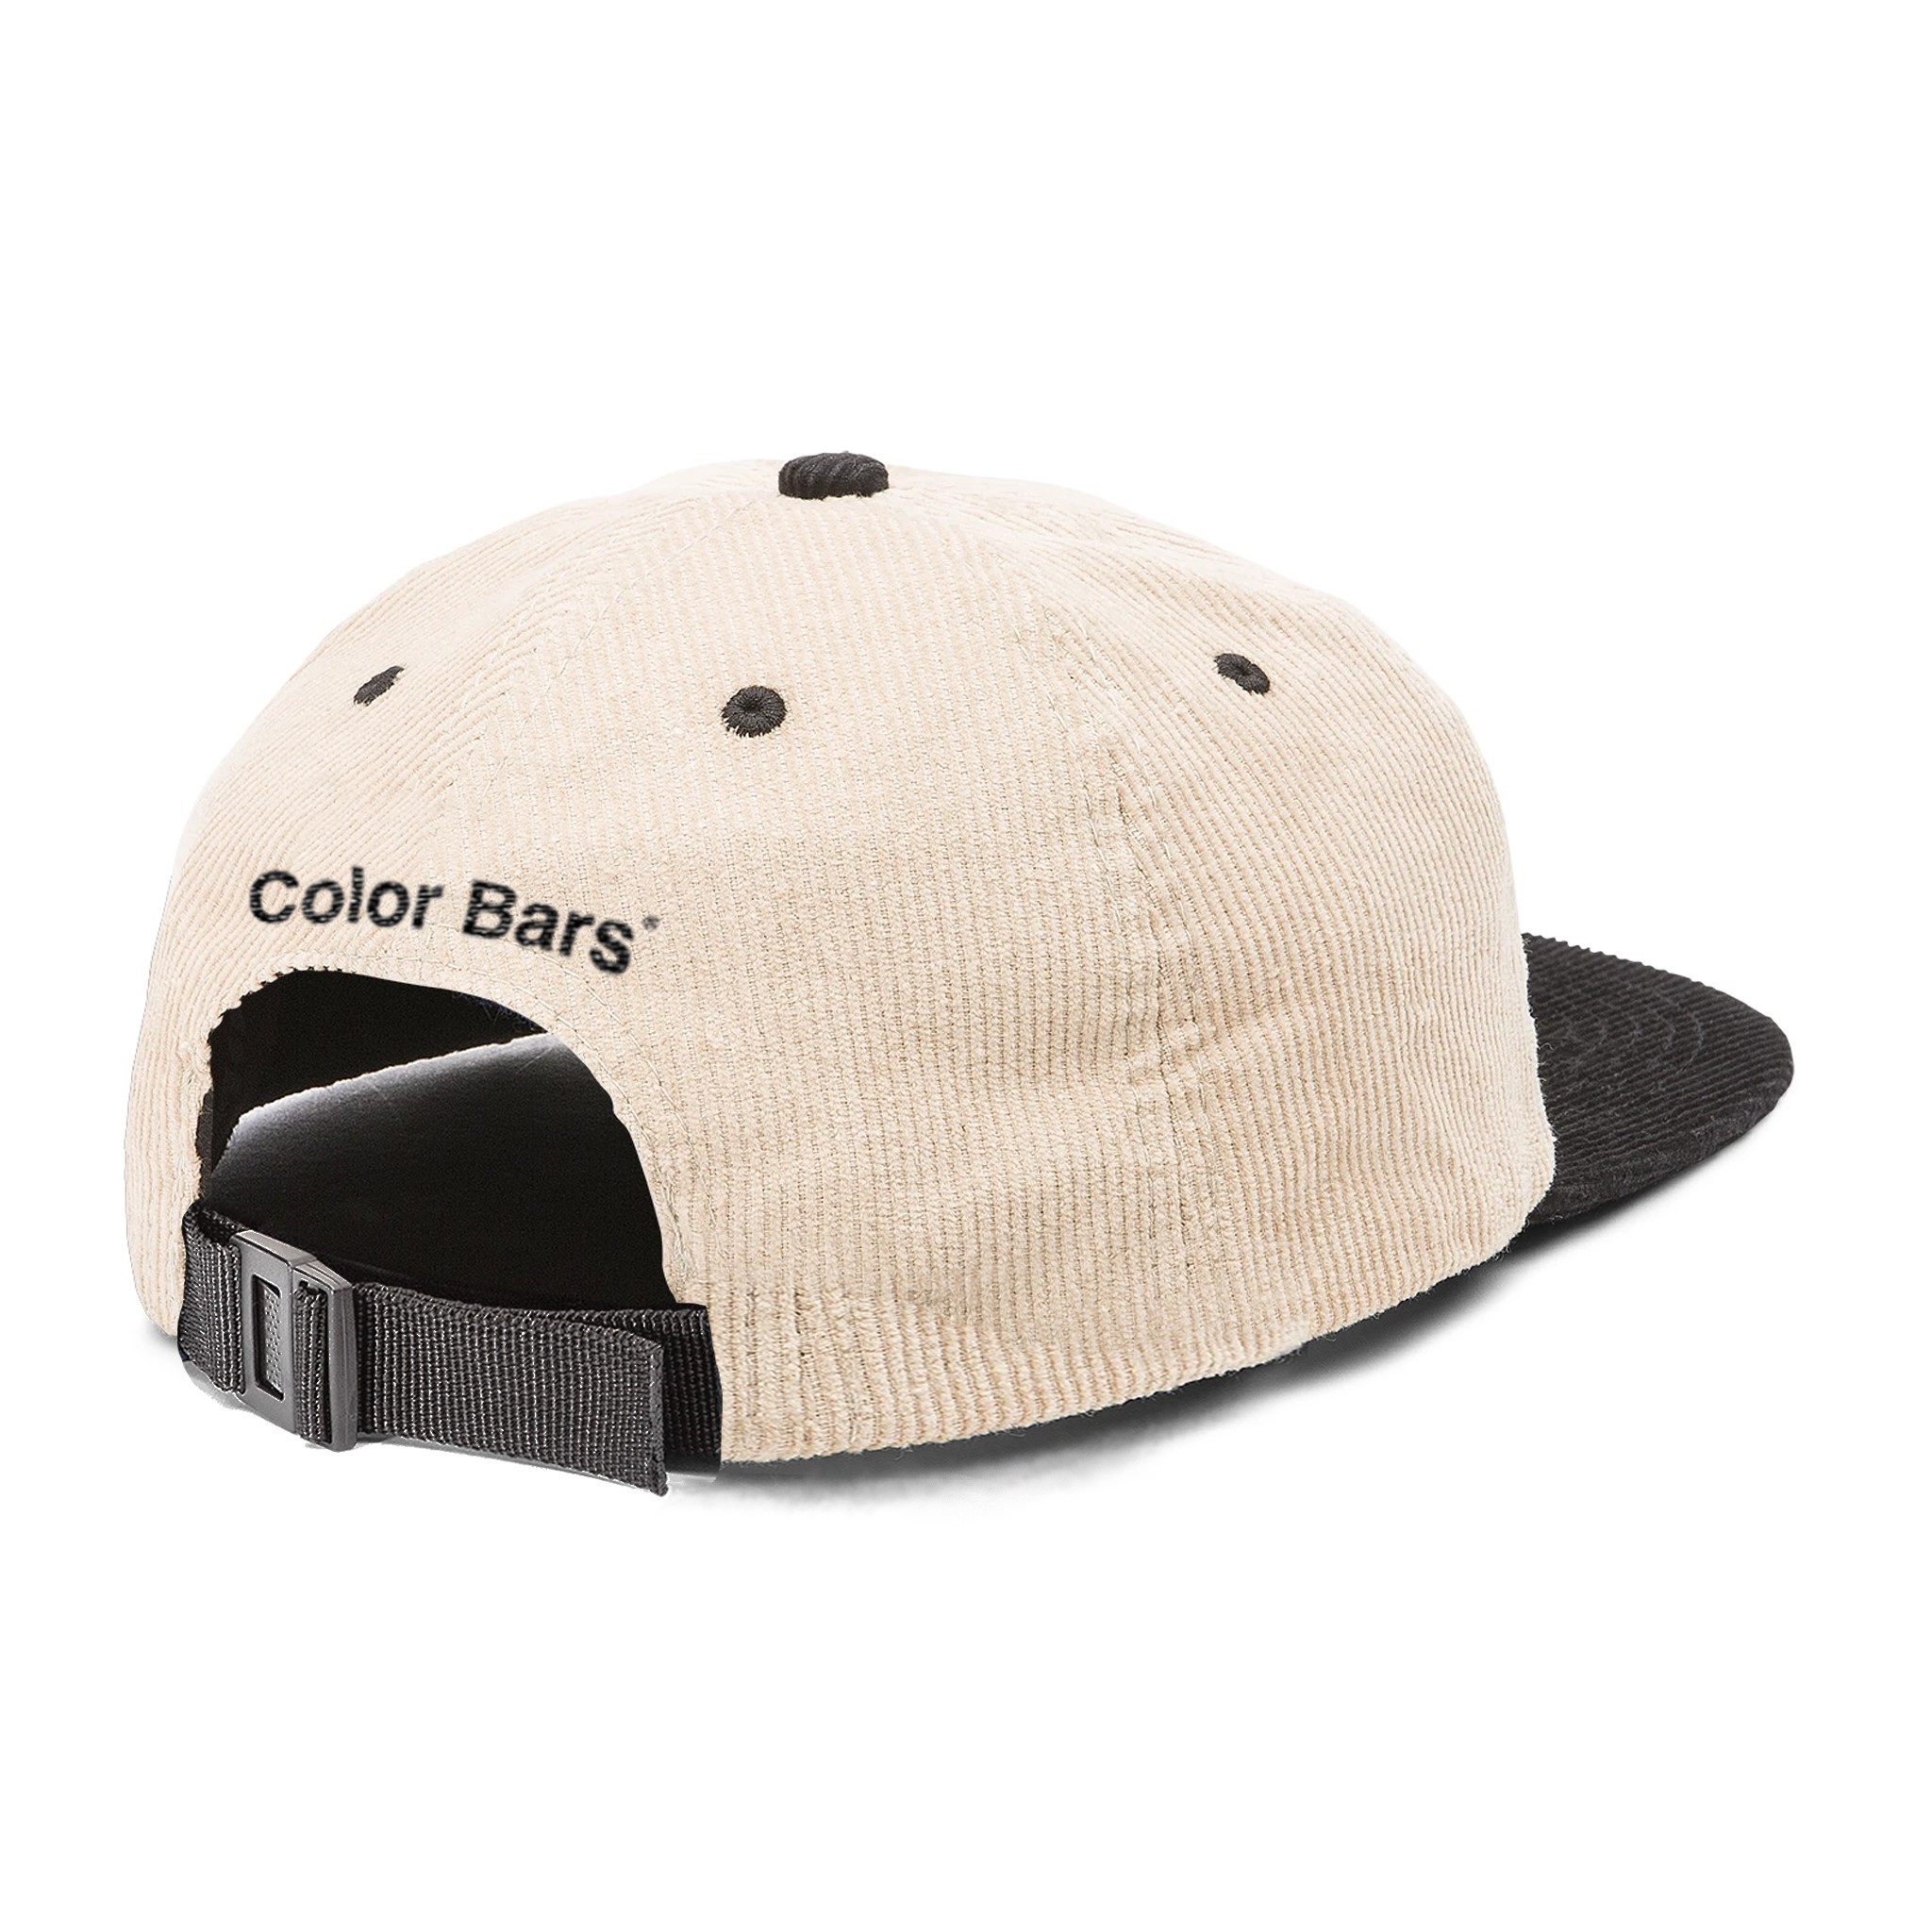 playboy-x-color-bars-tokyo-snapback-hat image count 1